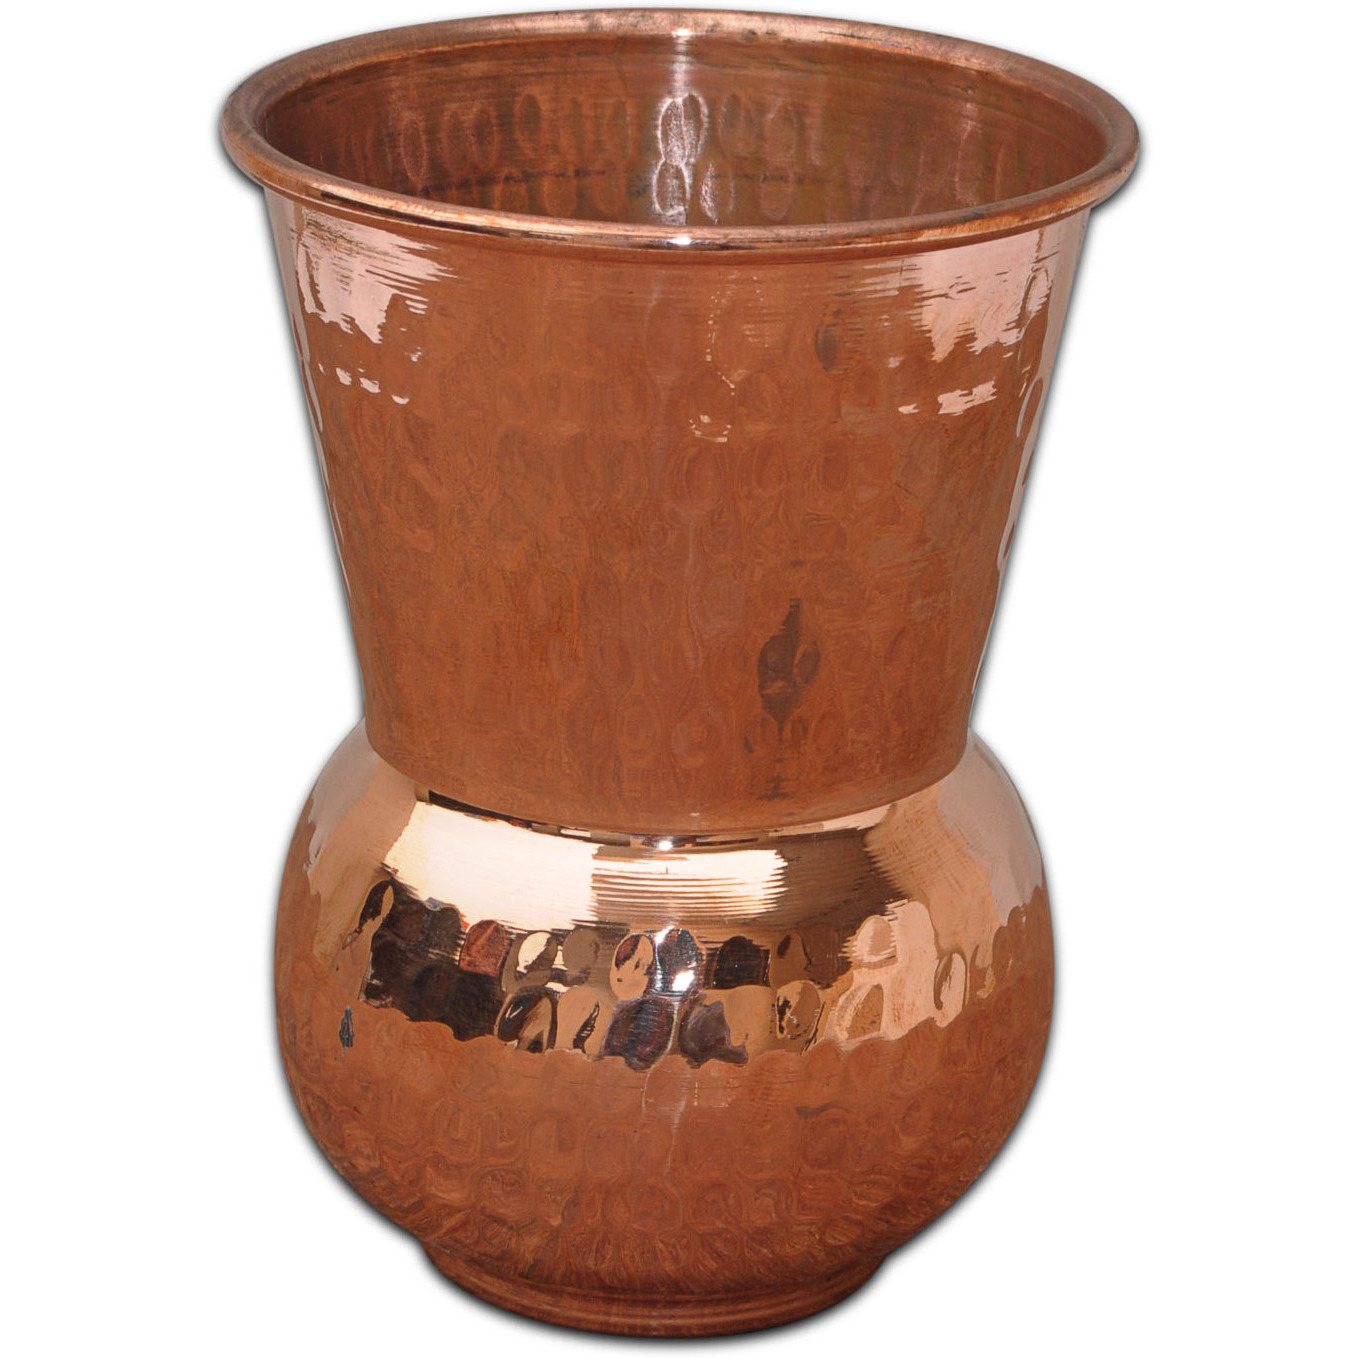 Set of 5 - Prisha India Craft B. Copper Muglai Matka Glass Hammered Style Drinkware Tumbler Handmade Copper Cups - Traveller's Copper Mug for Ayurveda Benefits